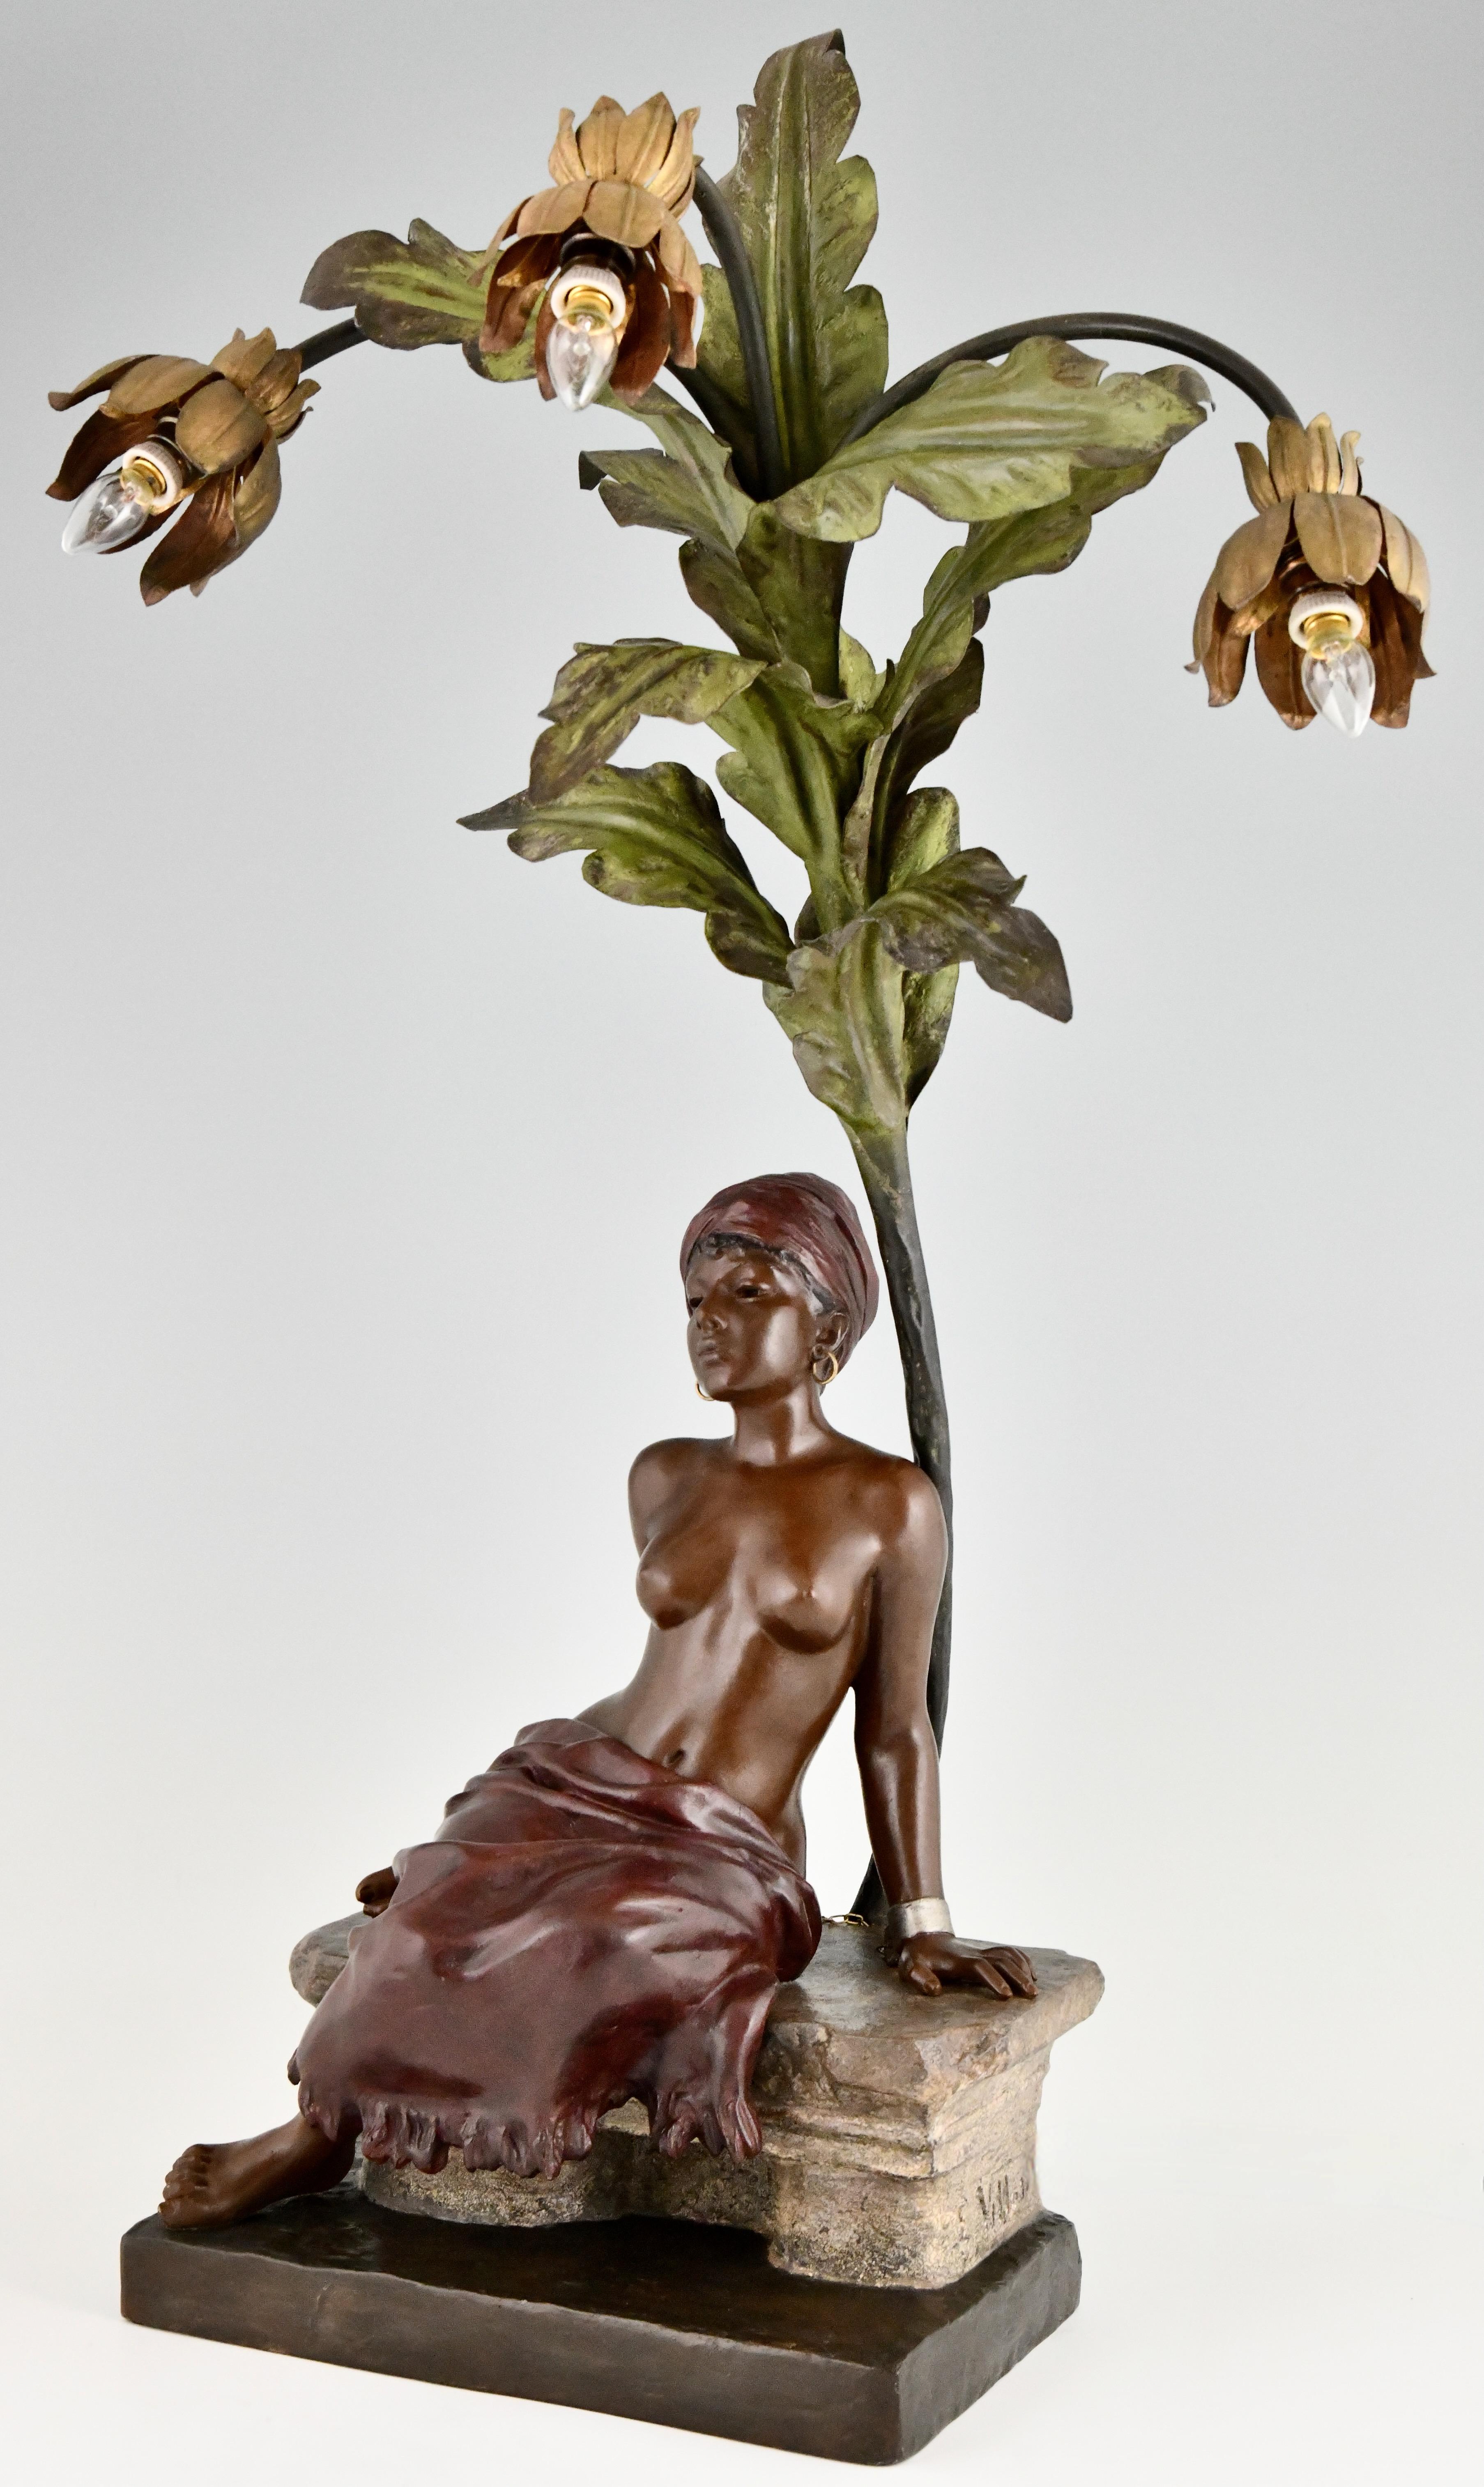 Early 20th Century Art Nouveau lamp slave girl under palm tree by Emmanuel Villanis